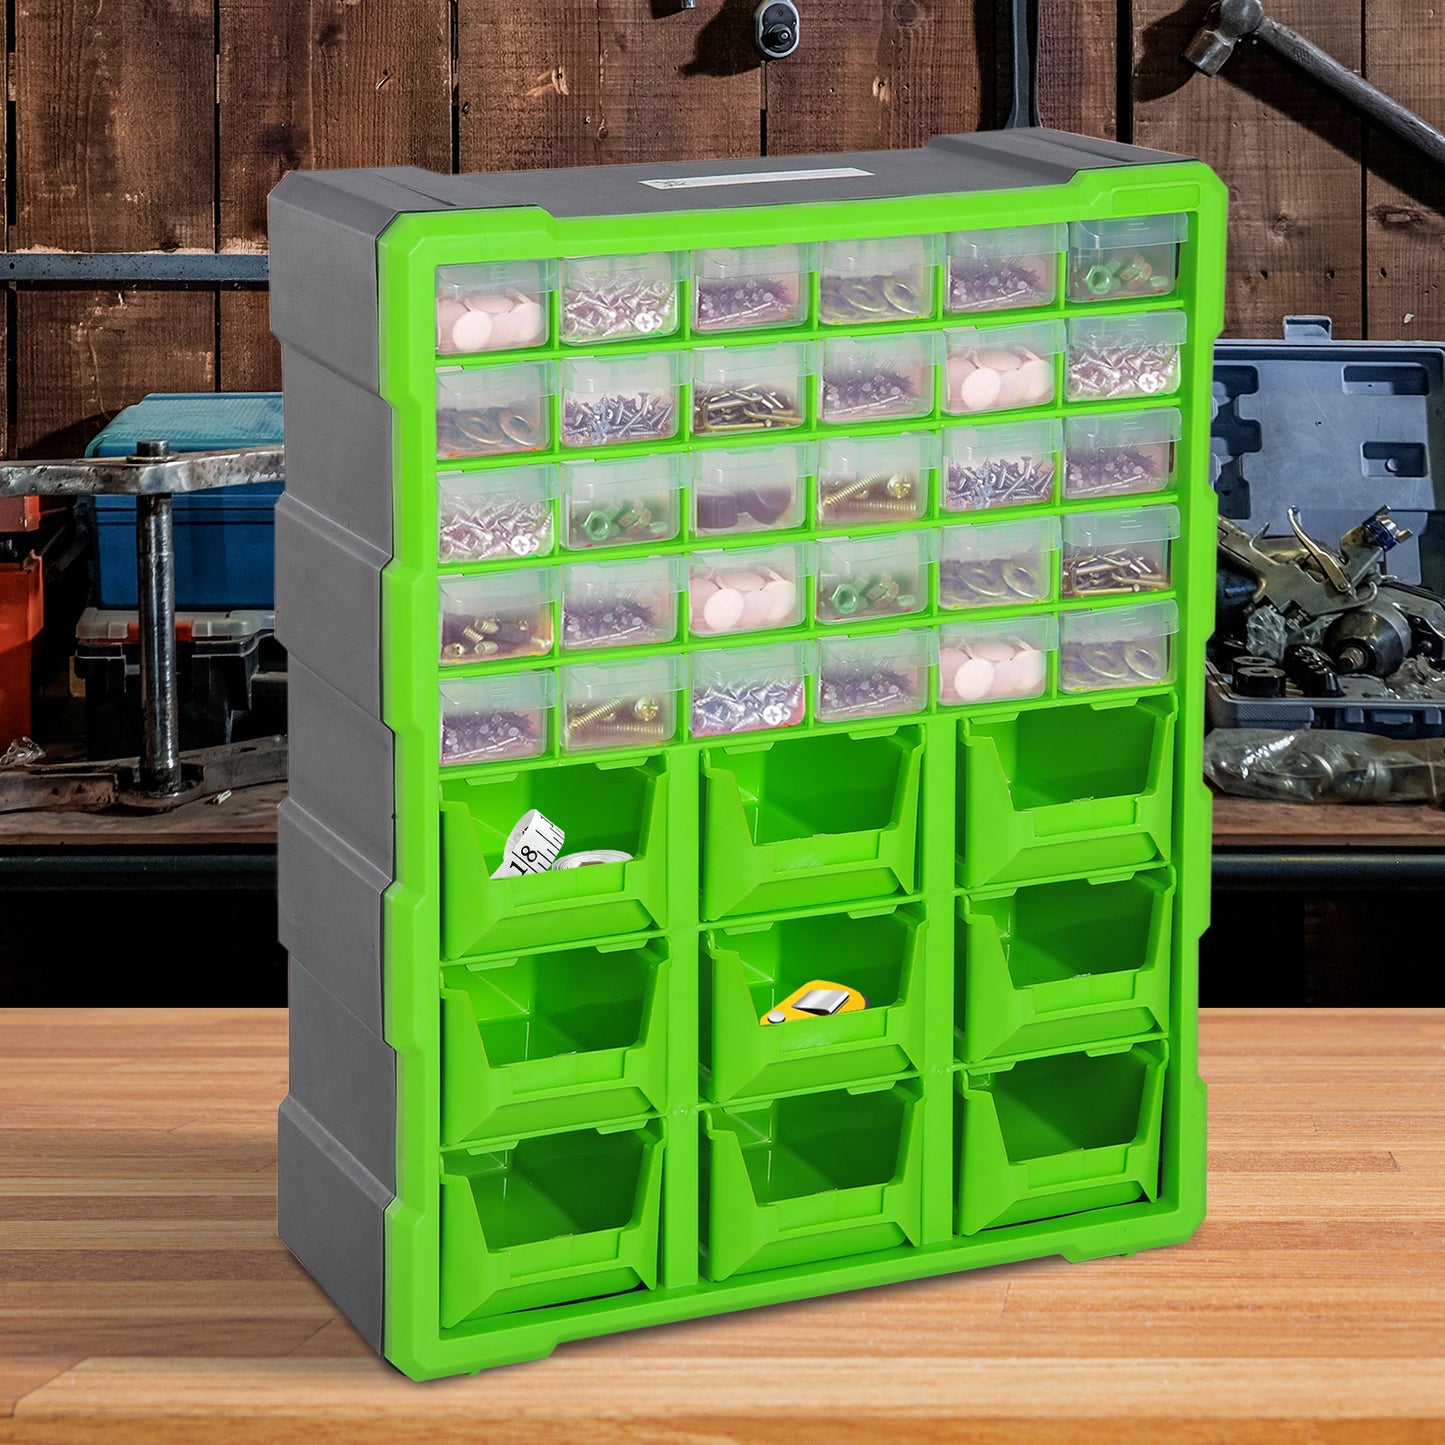 DURHAND 39 Drawer Storage Cabinets, 38Lx16Dx47.5H cm, Plastic-Green